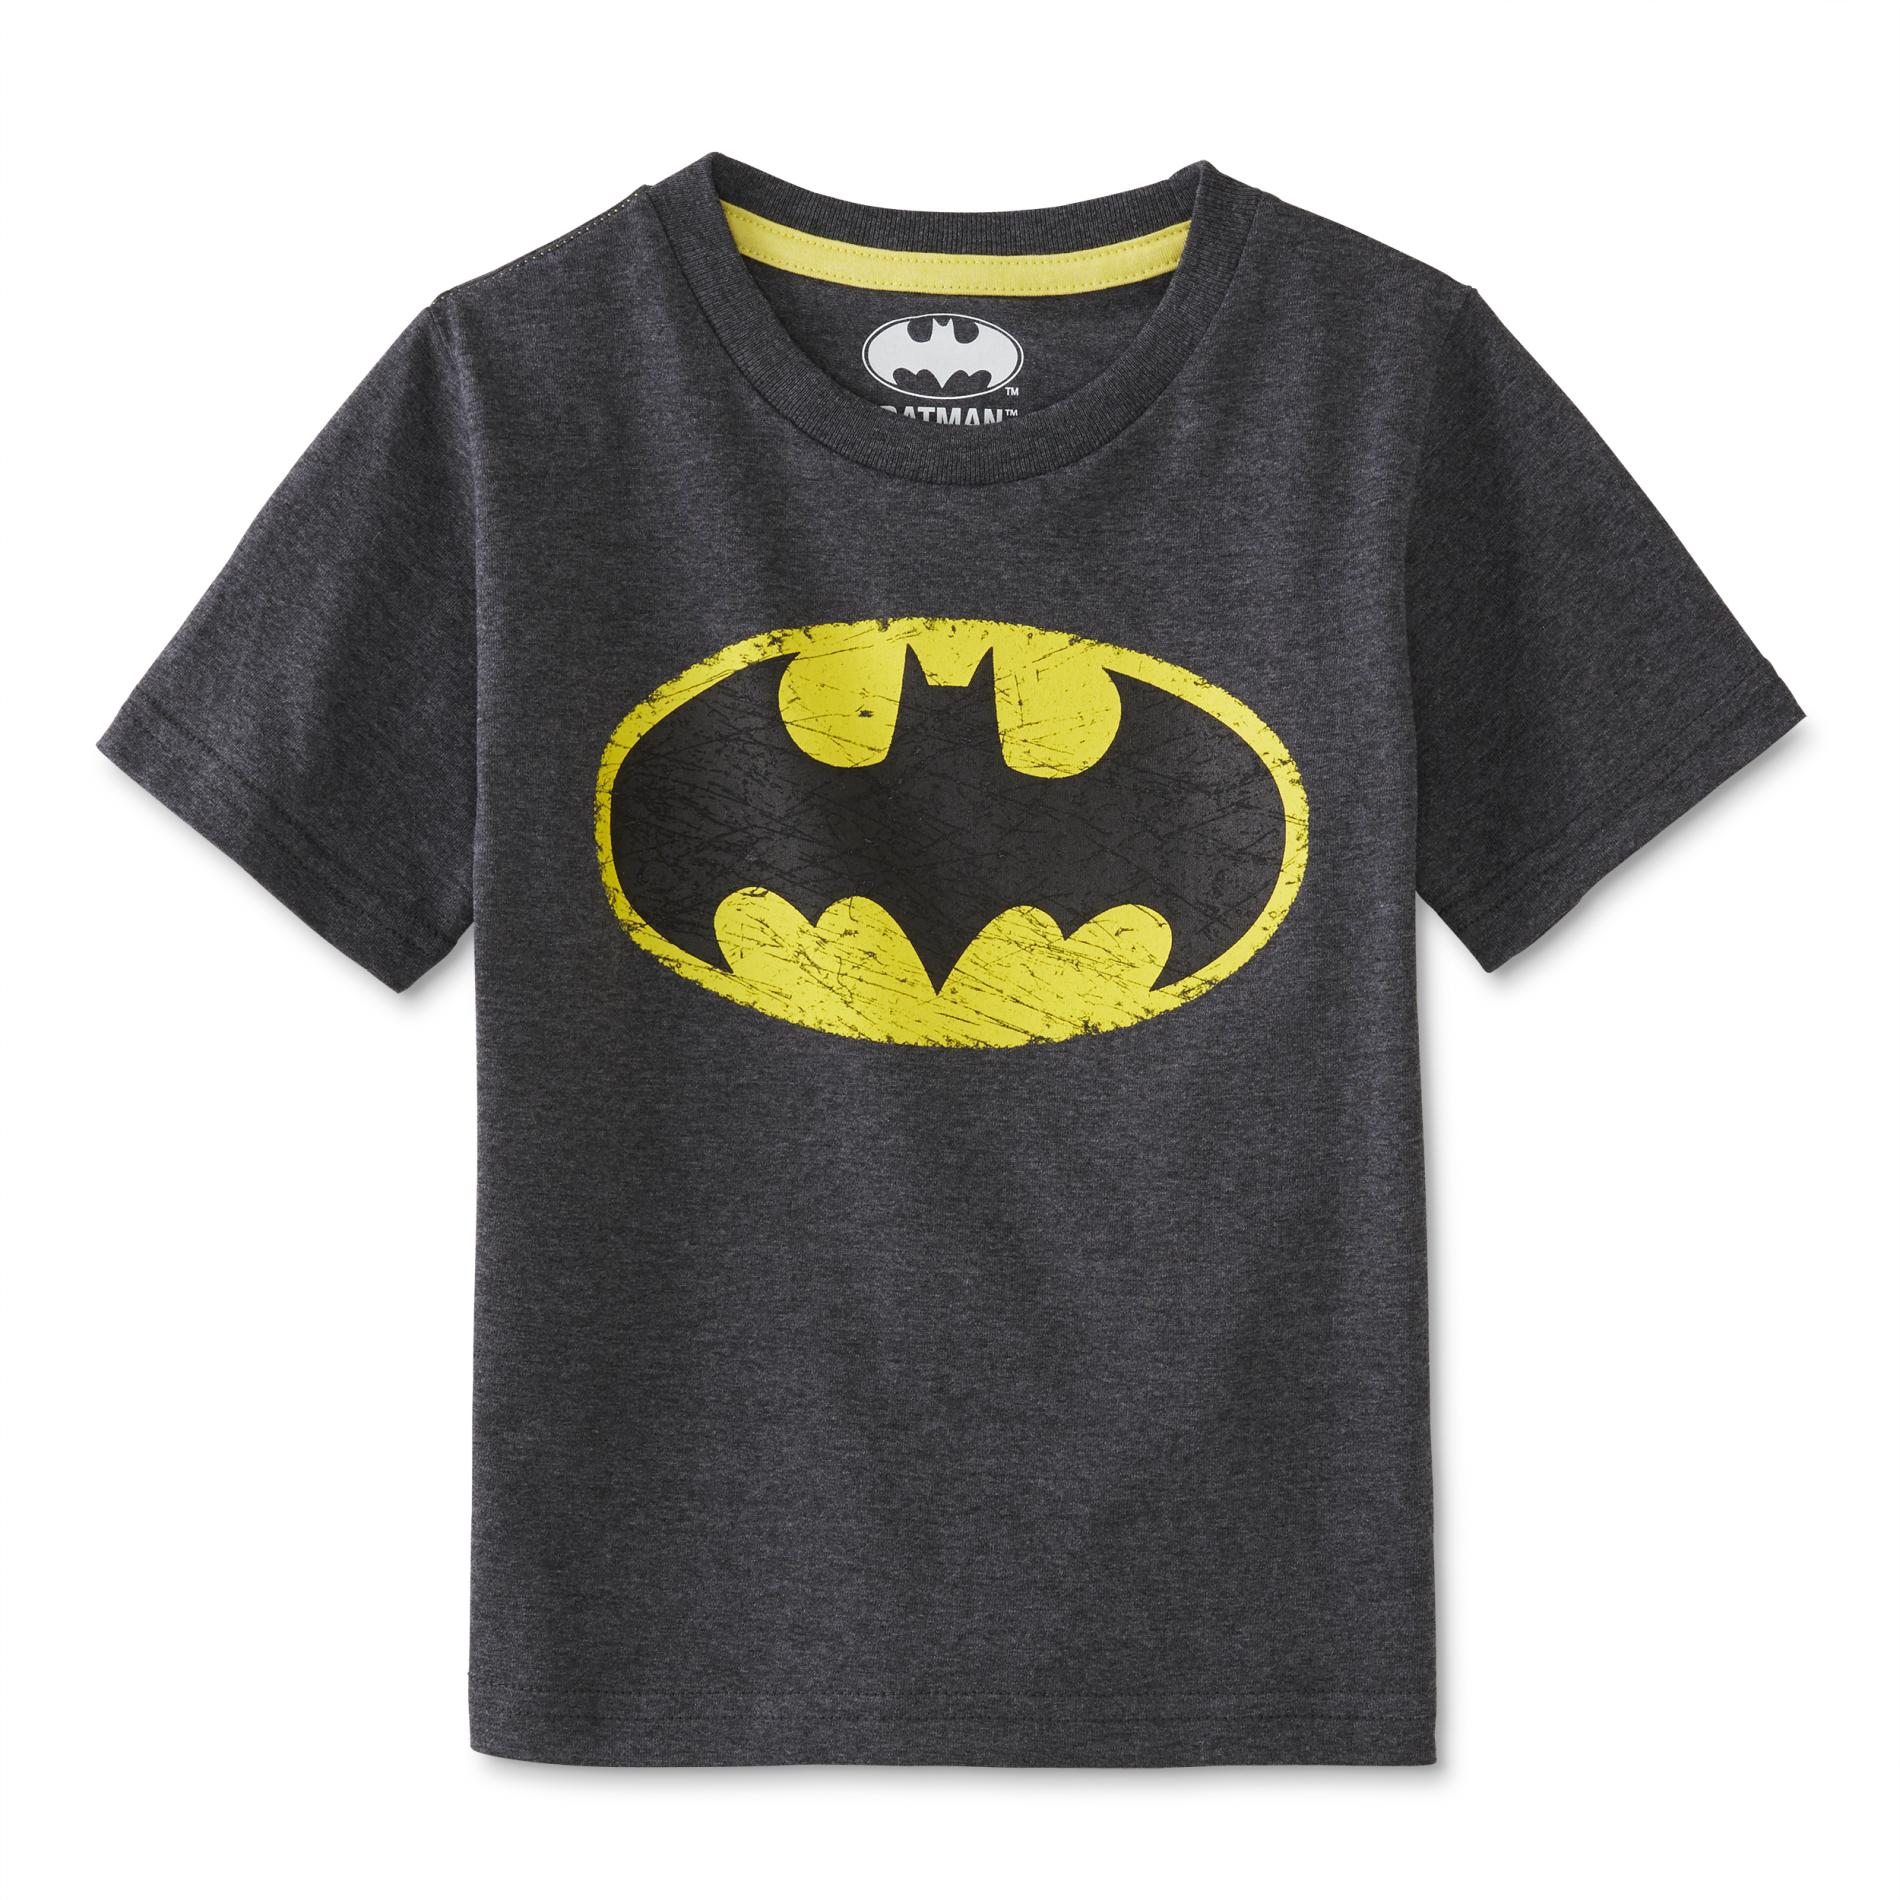 Batman Toddler Boys' Graphic T-Shirt - Emblem